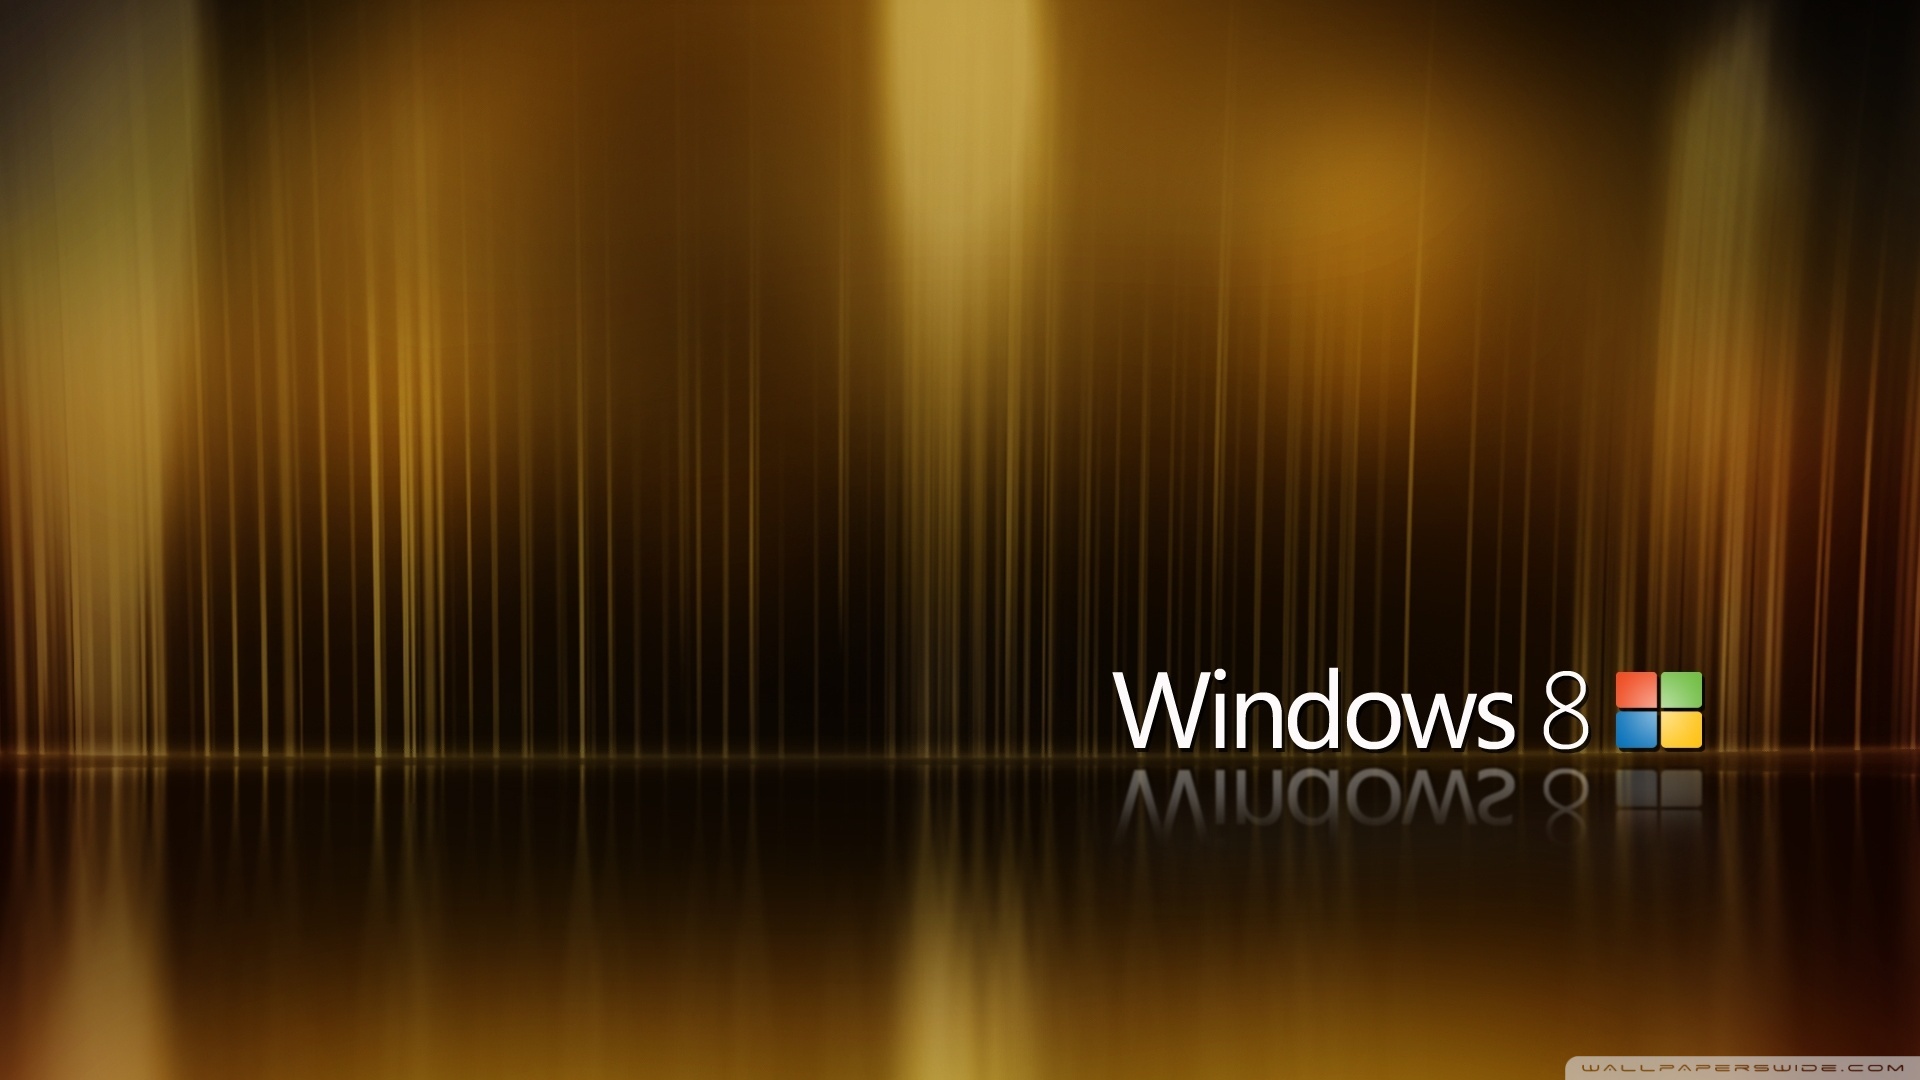 Windows 8 HD desktop wallpaper : High Definition : Fullscreen : Mobile